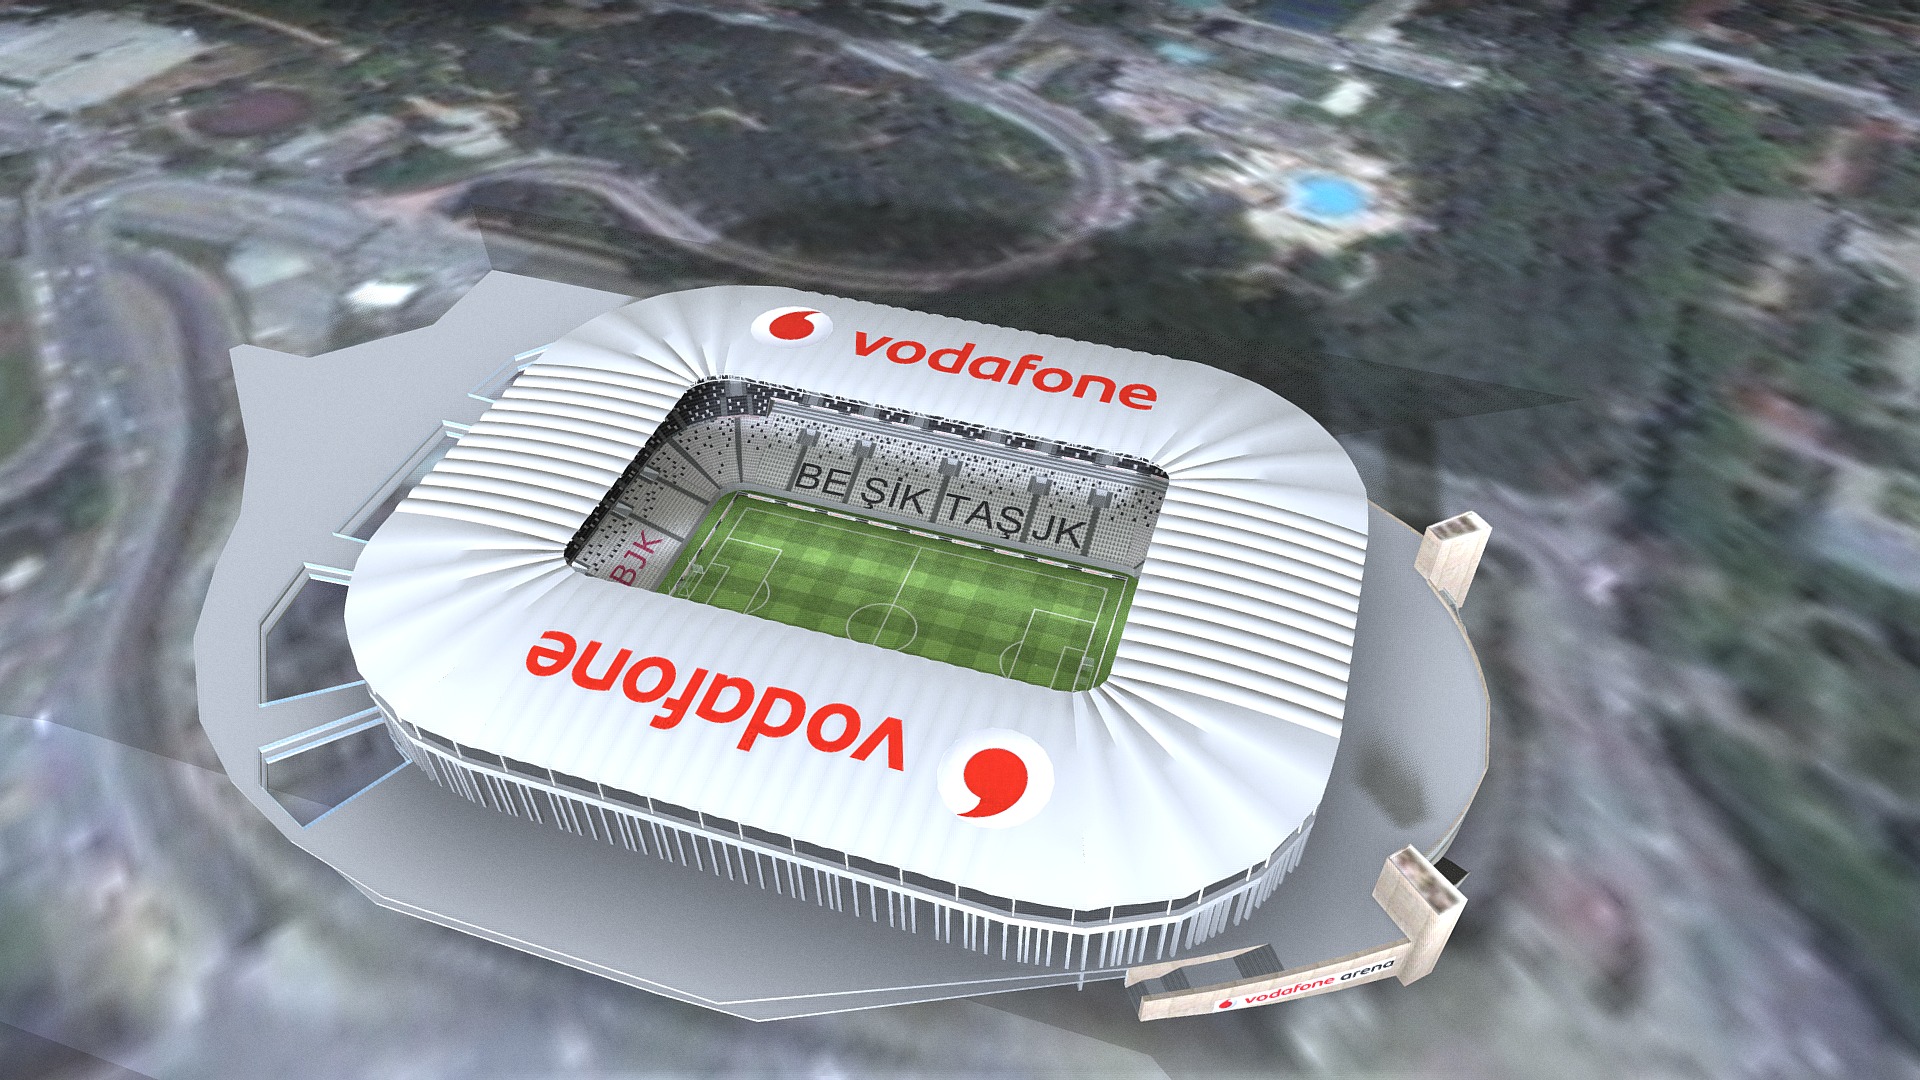 3D model Vodafone Park – Besiktas - This is a 3D model of the Vodafone Park - Besiktas. The 3D model is about graphical user interface.